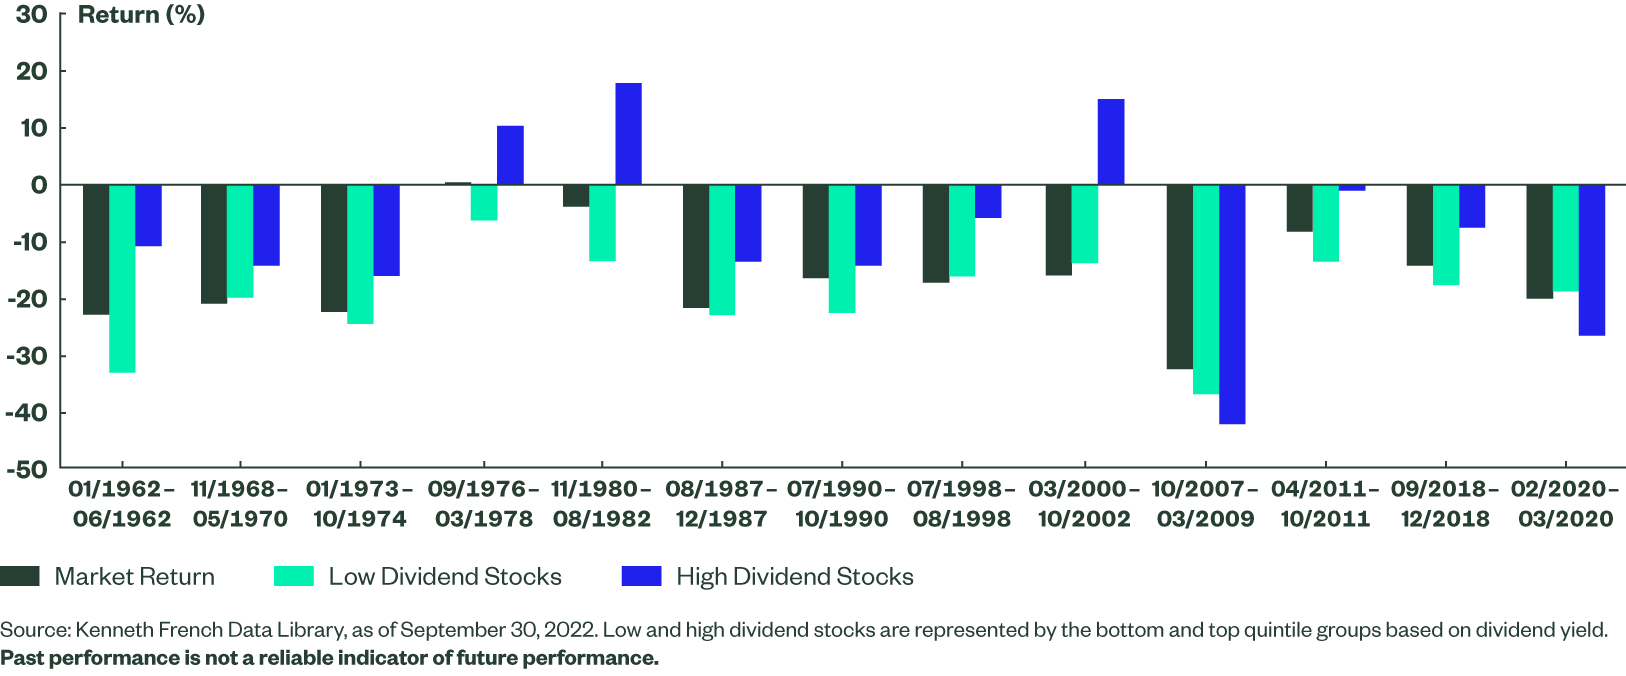 Dividend Stocks Outperform During Bear Markets